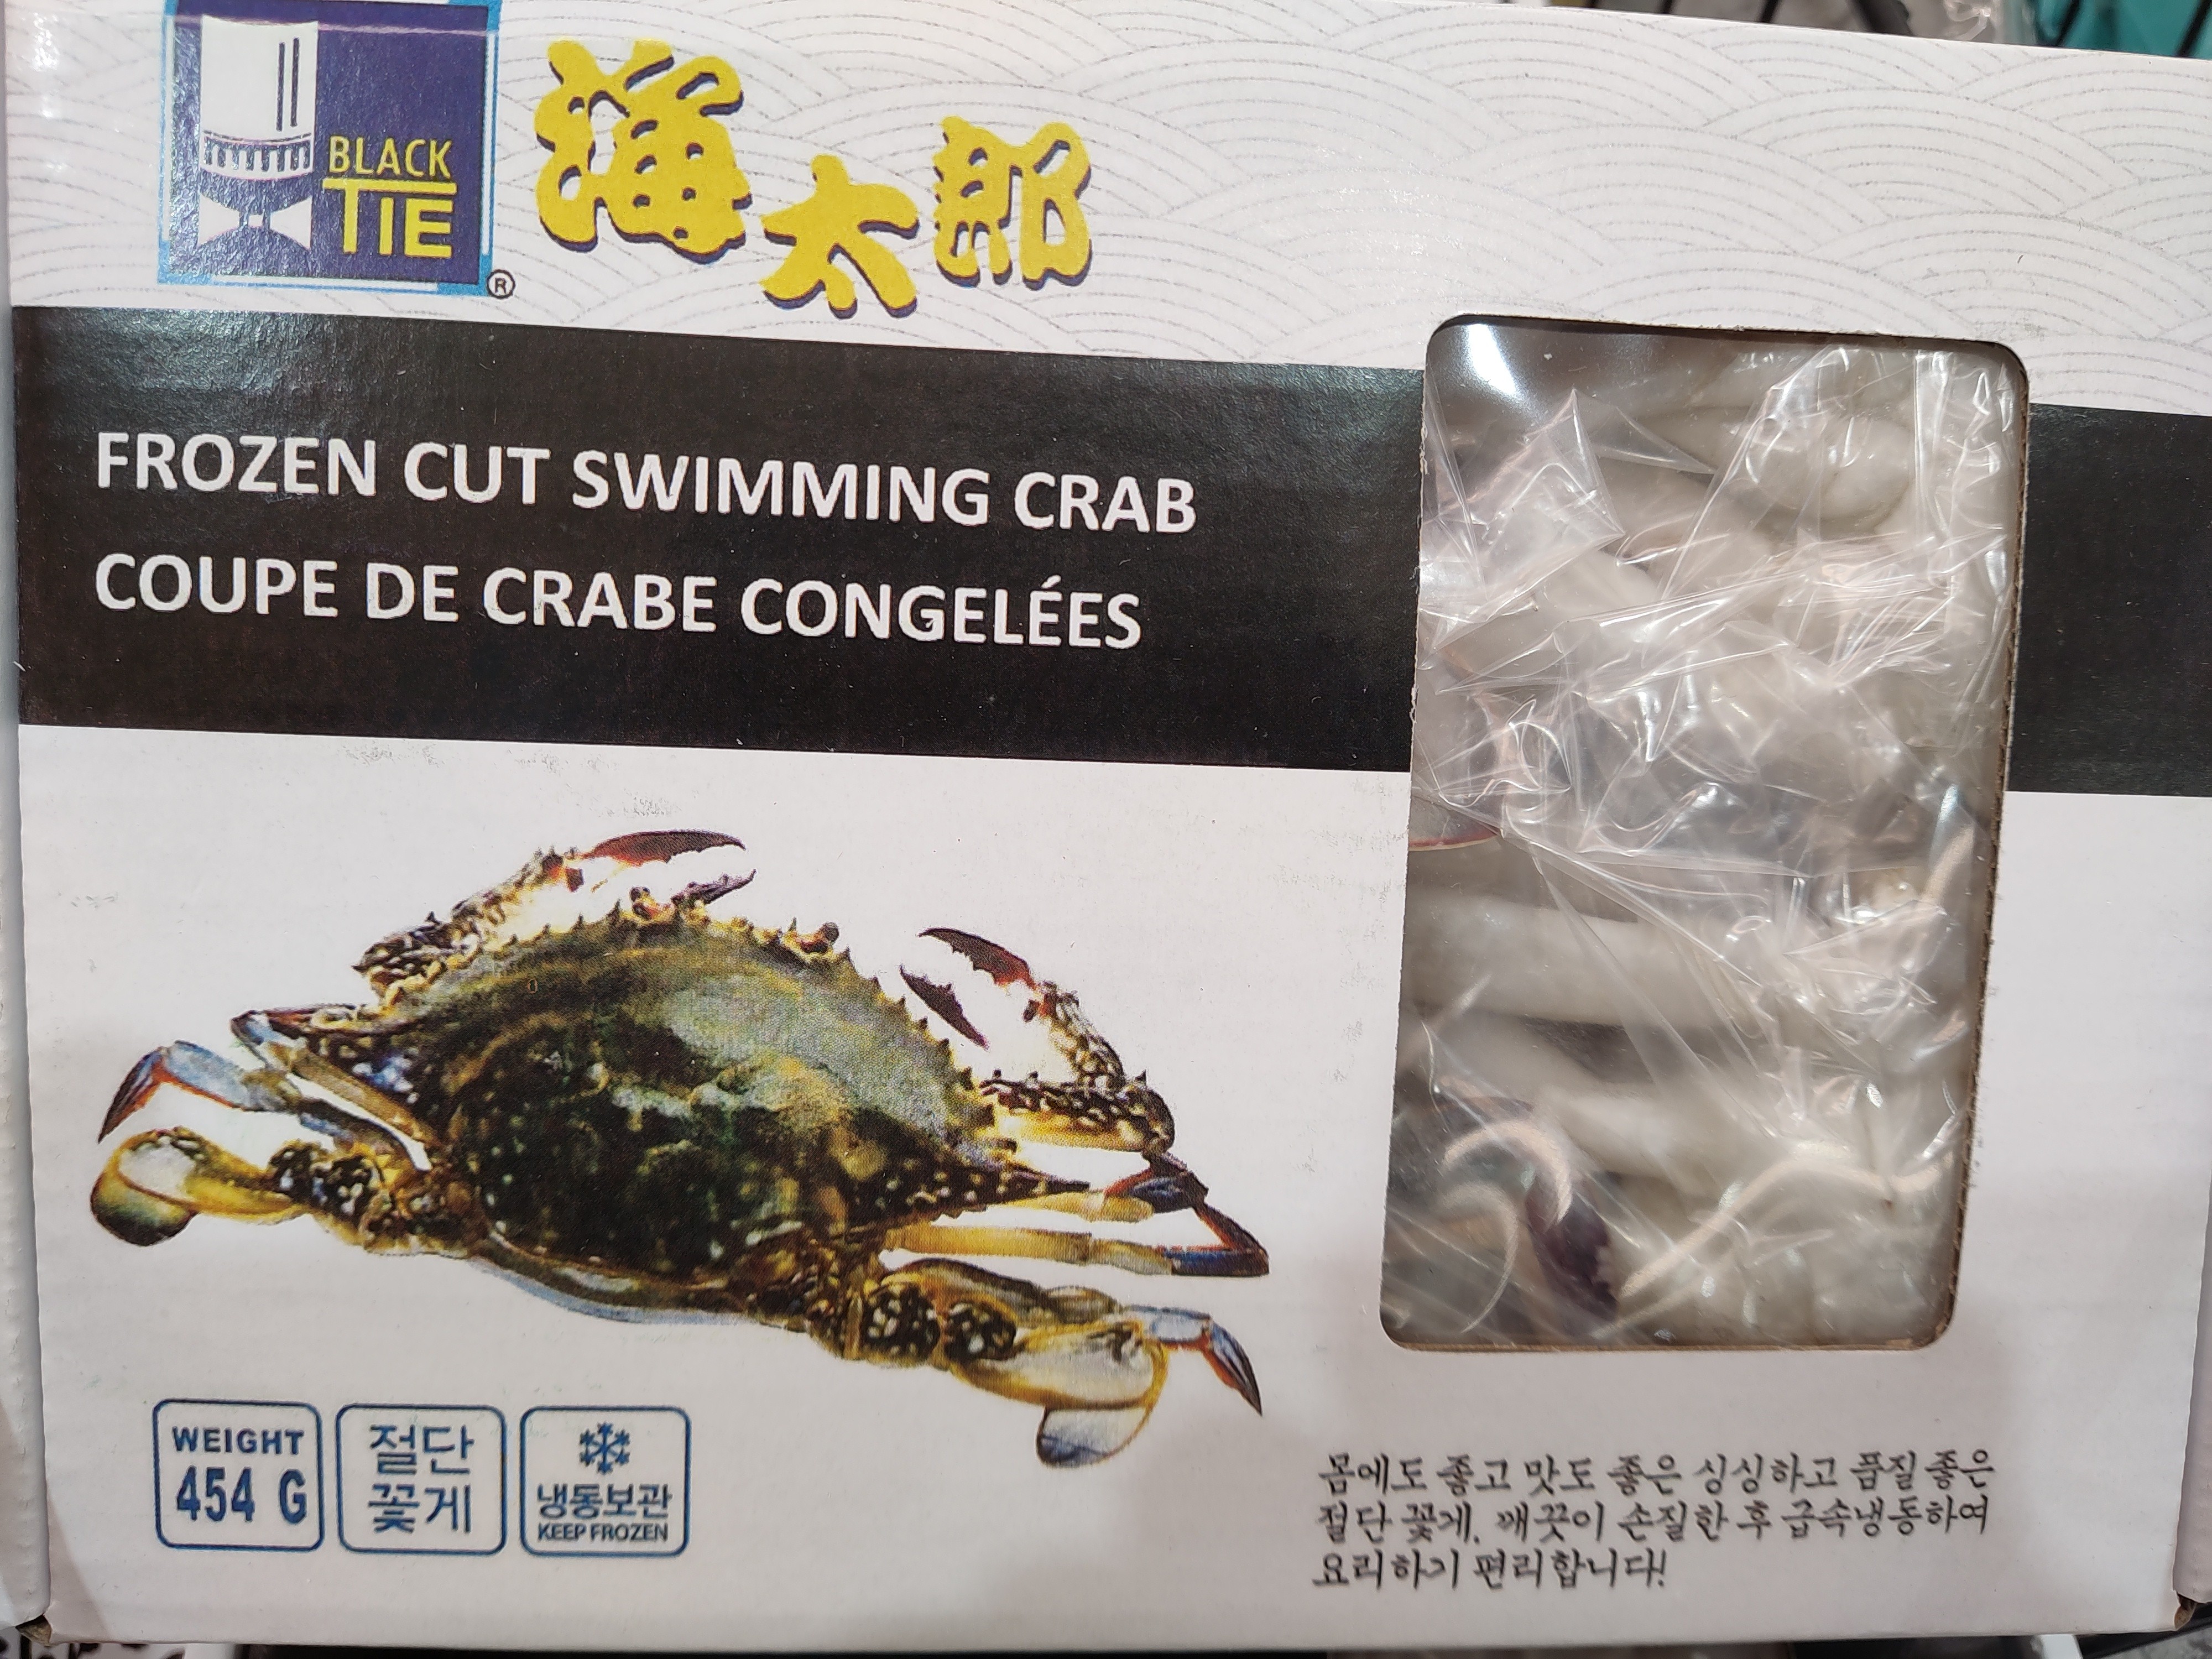 black-tie-frozen-cut-swimming-crab